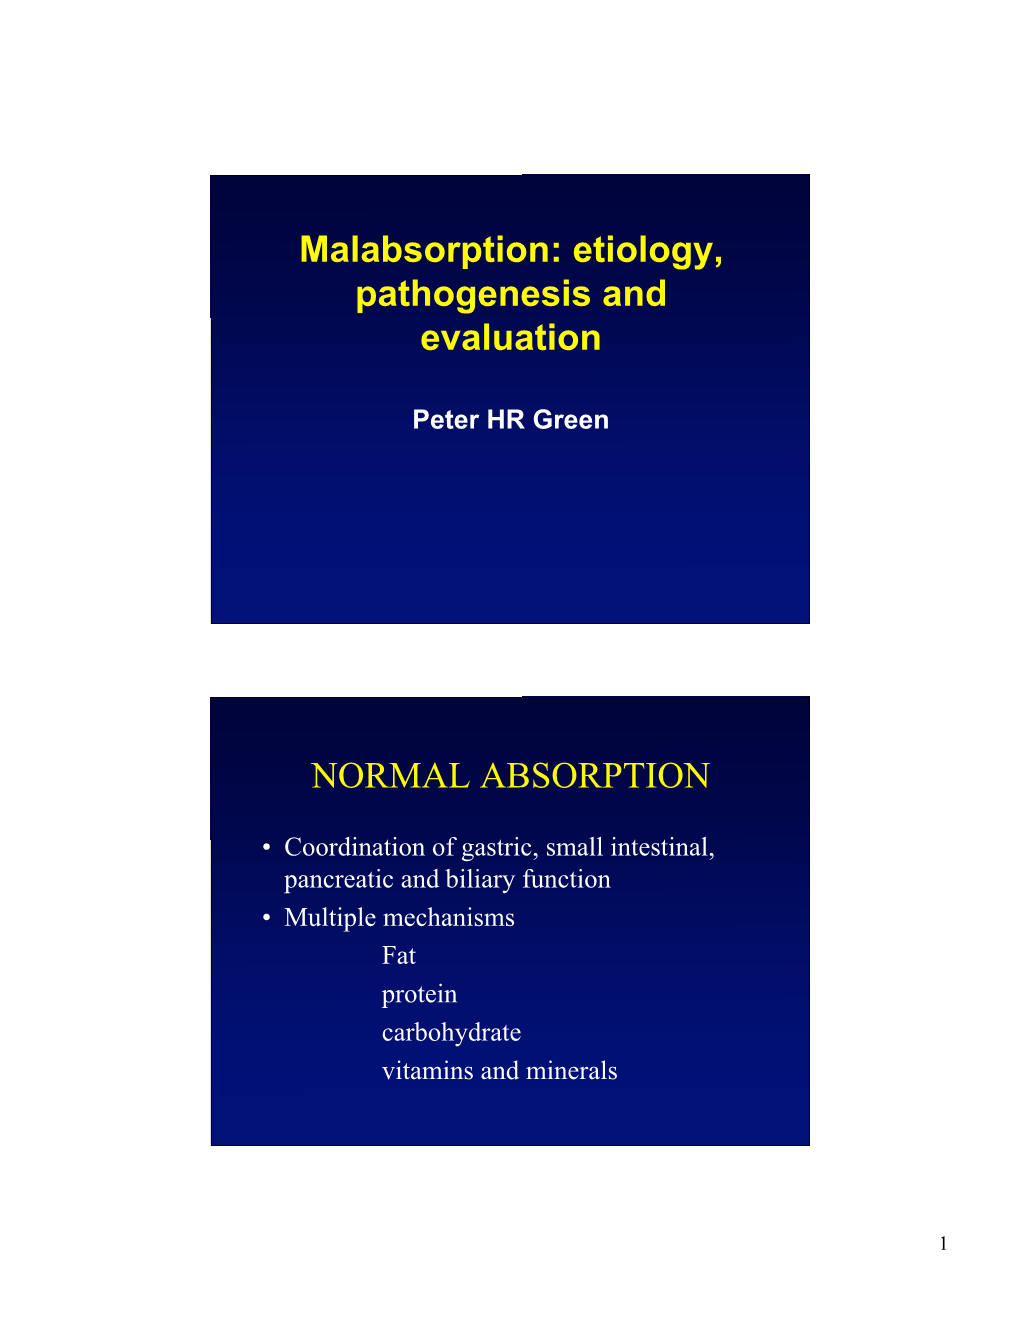 Malabsorption: Etiology, Pathogenesis and Evaluation